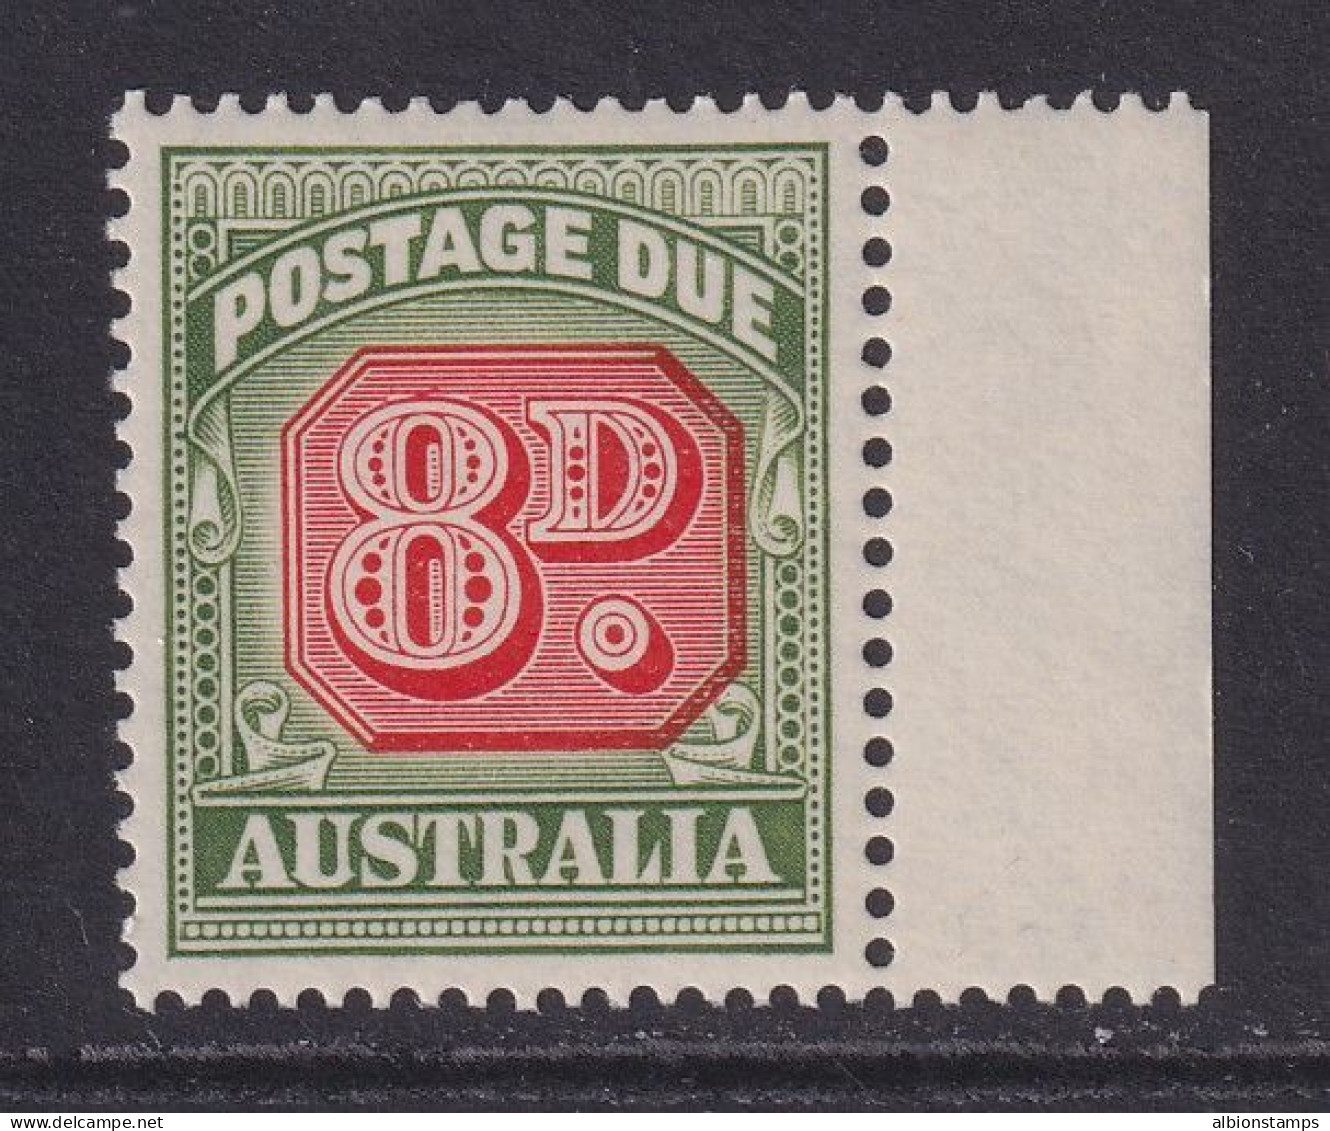 Australia, Scott J92 (SG D138), MNH - Port Dû (Taxe)